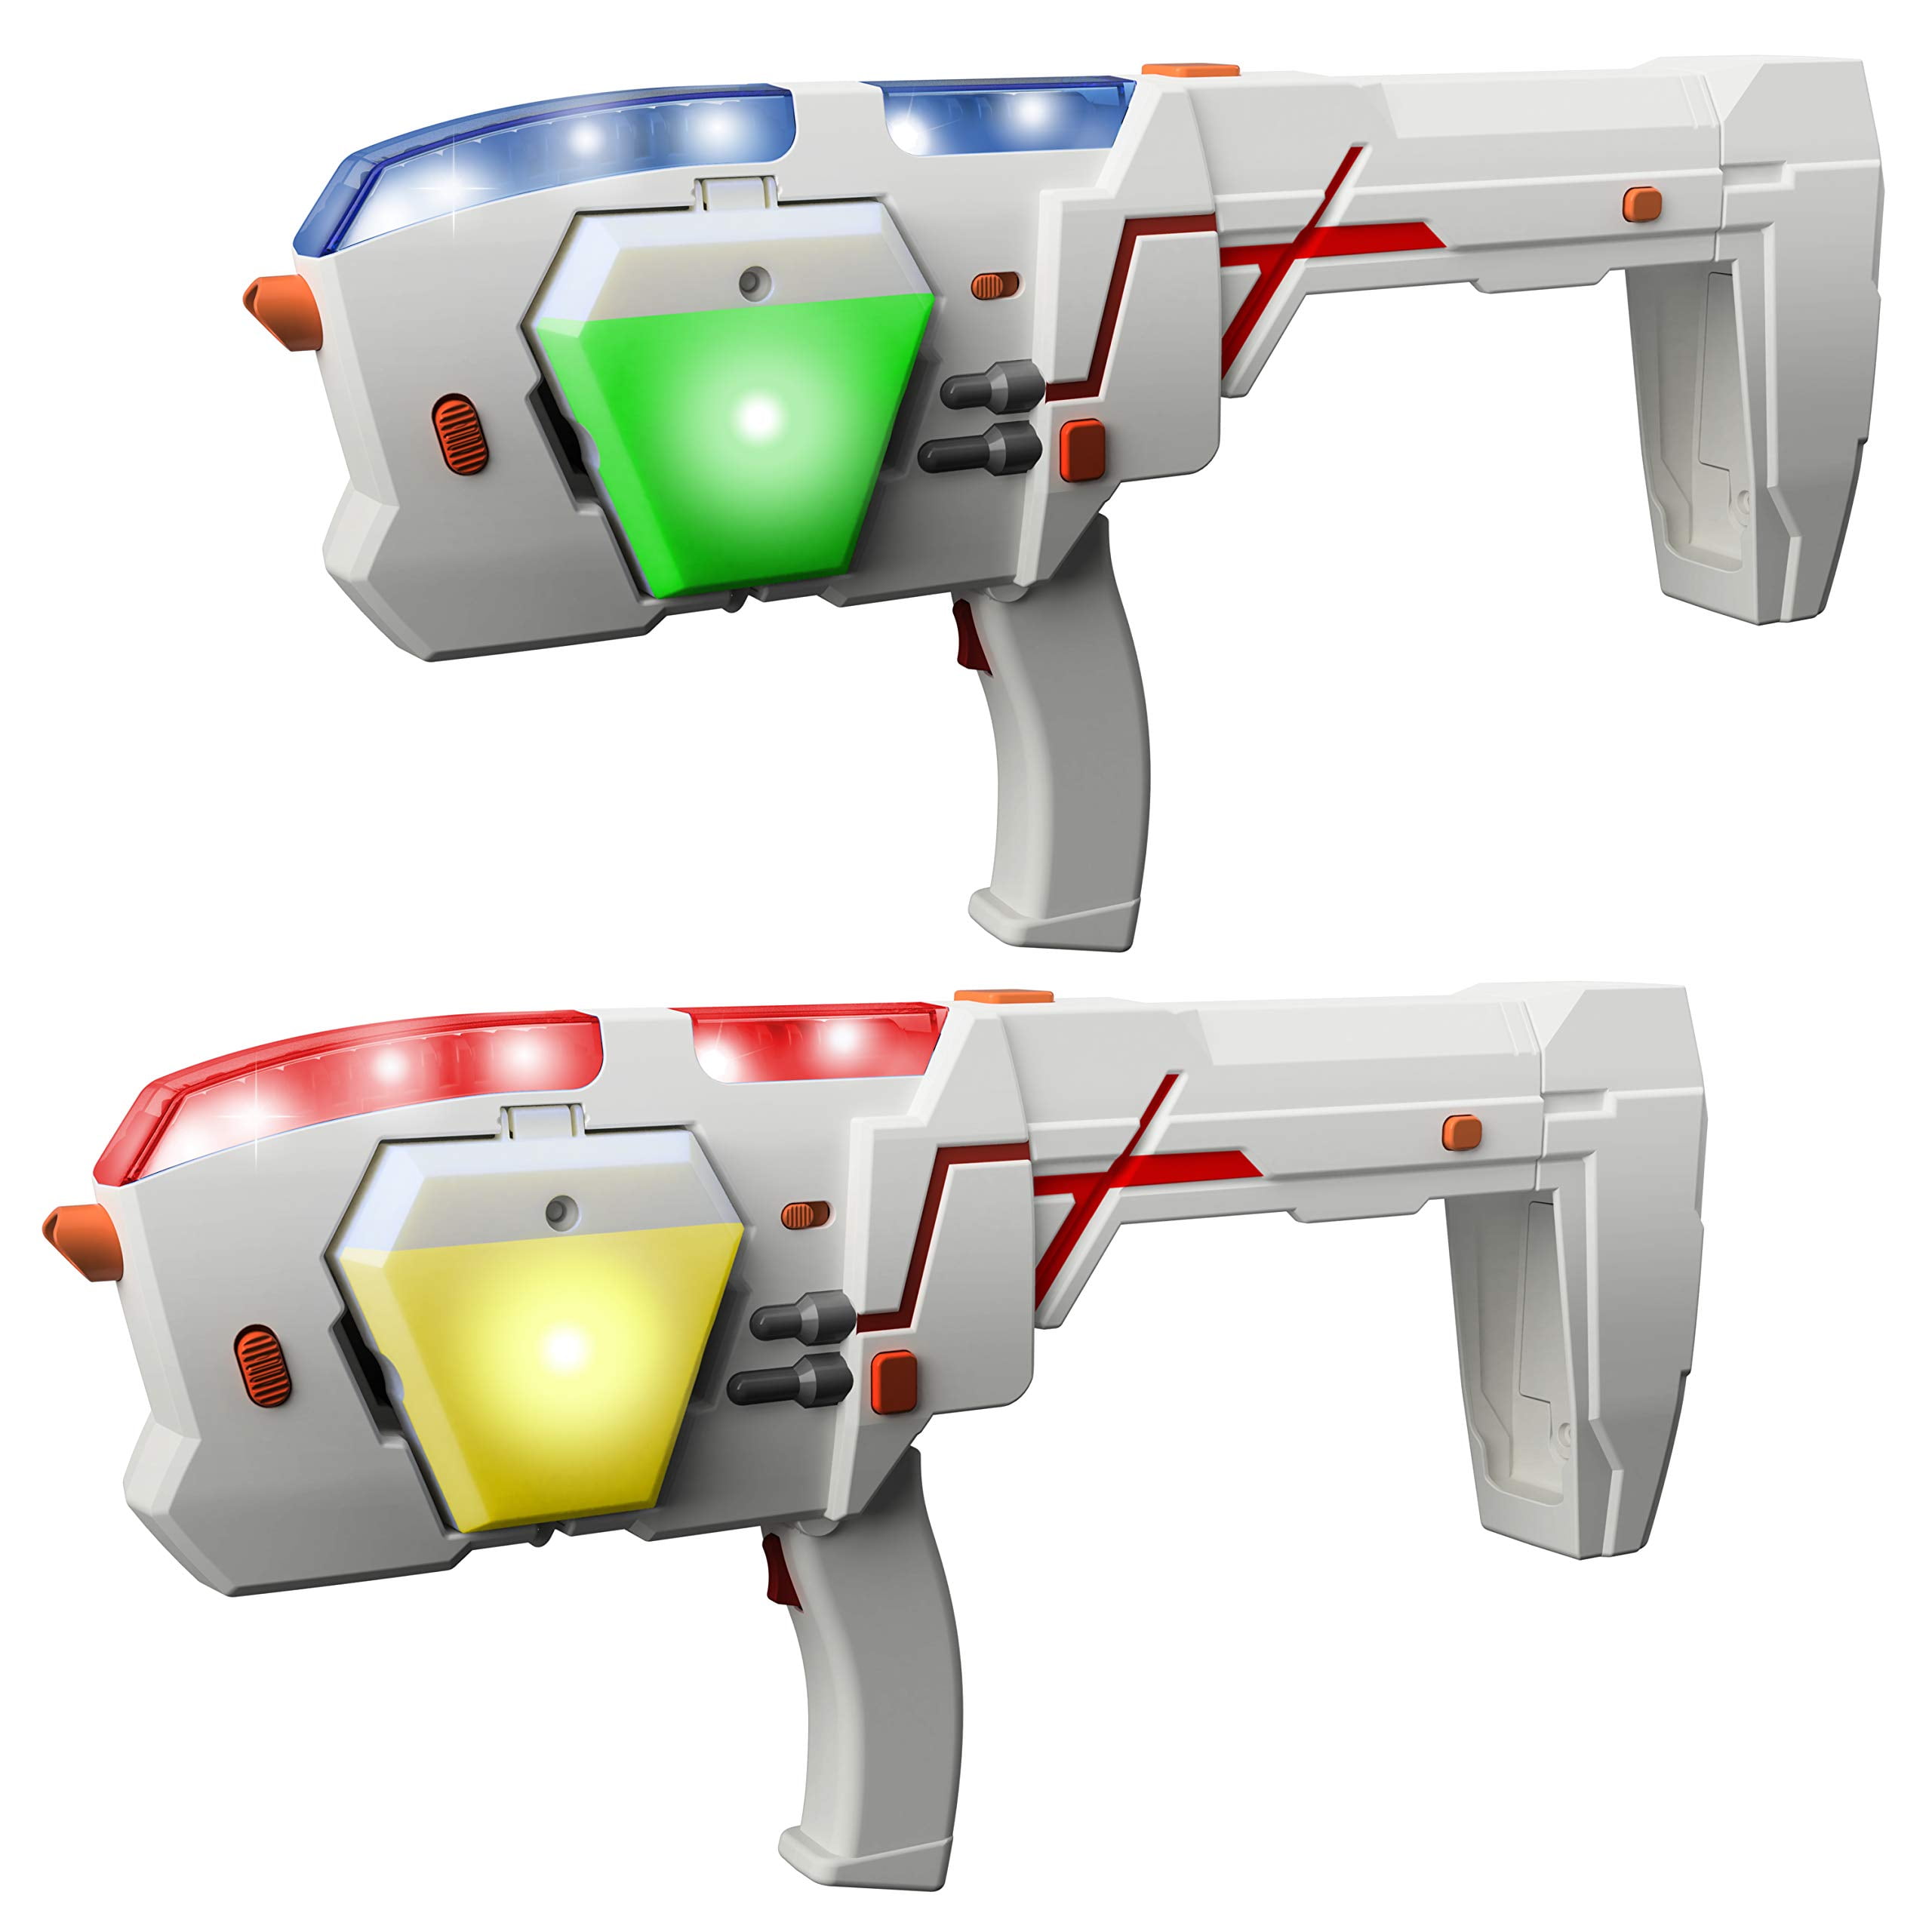 2 blasters. New Laser X Double Morph Blasters 90M infrared gaming range 